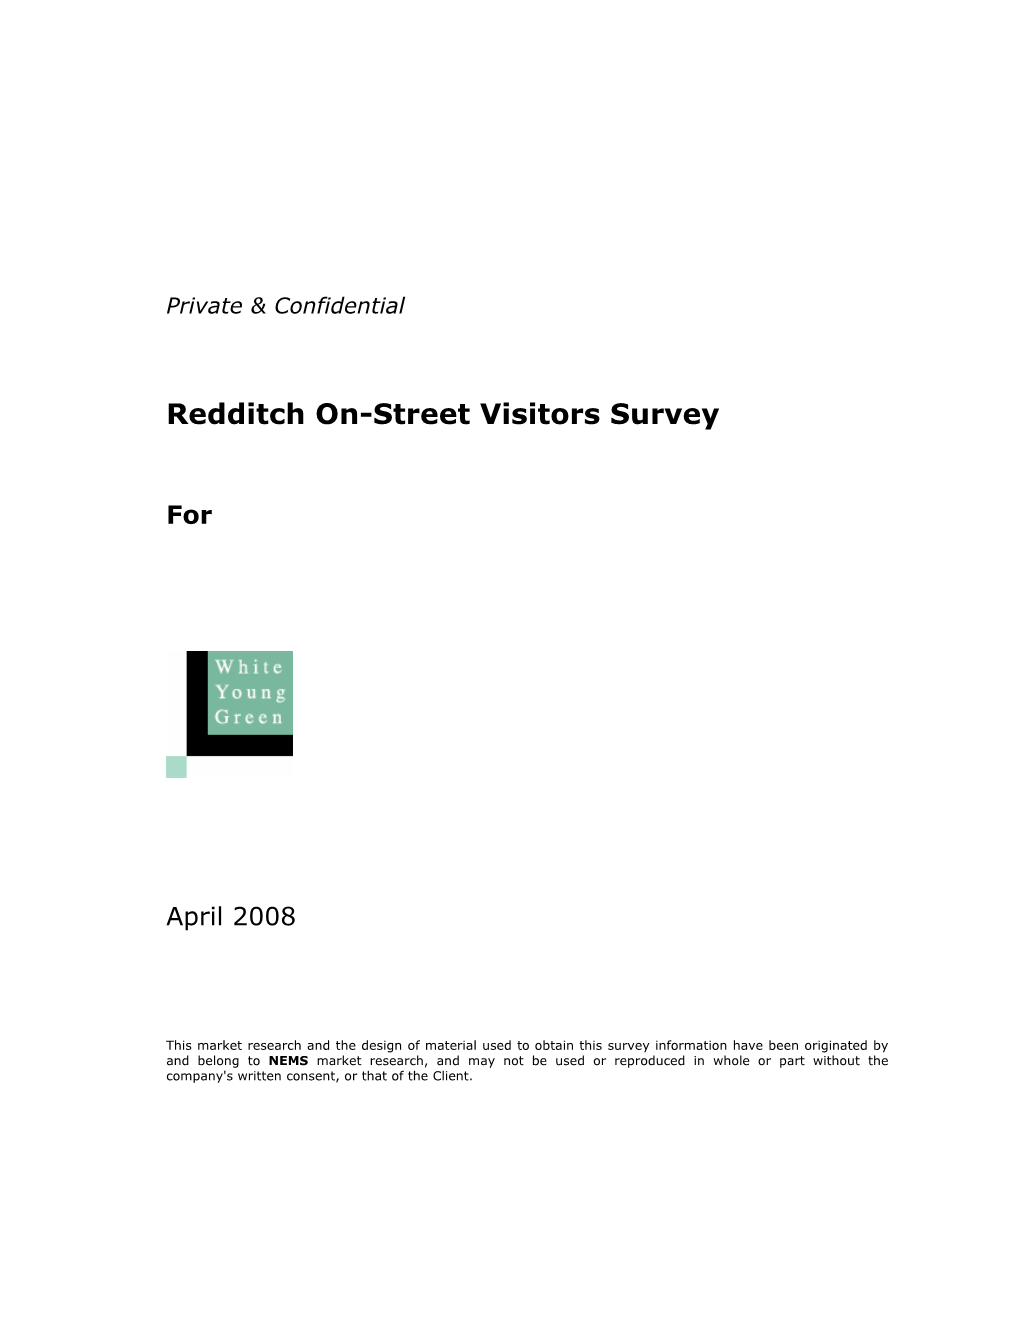 Redditch On-Street Visitors Survey